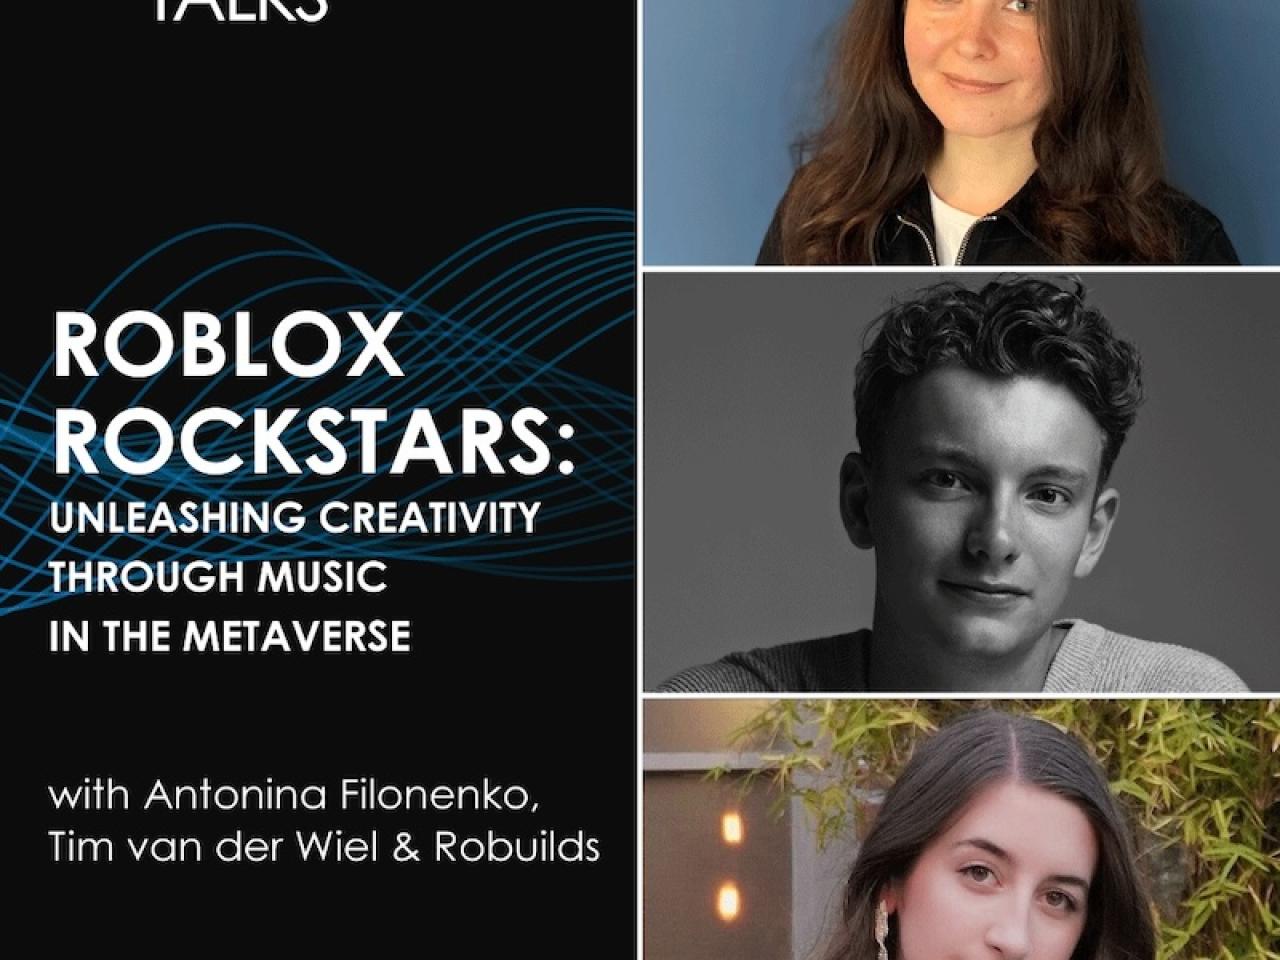 Roblox Rockstars: Unleashing creativity through music in the metaverse.